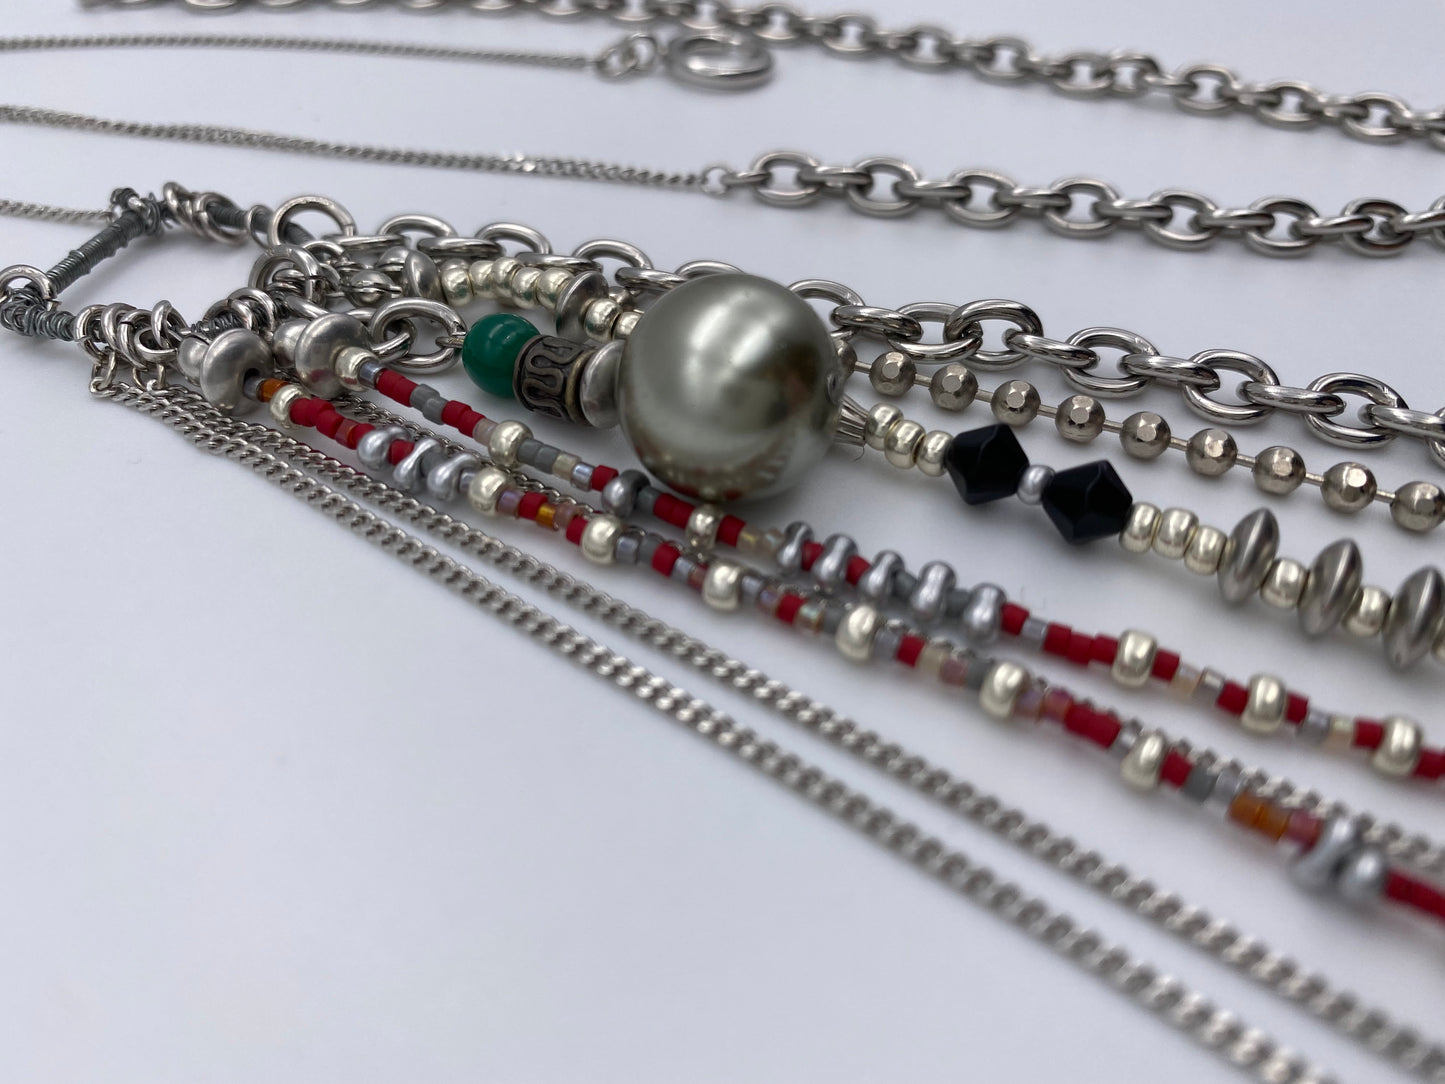 JalaJara chain necklace